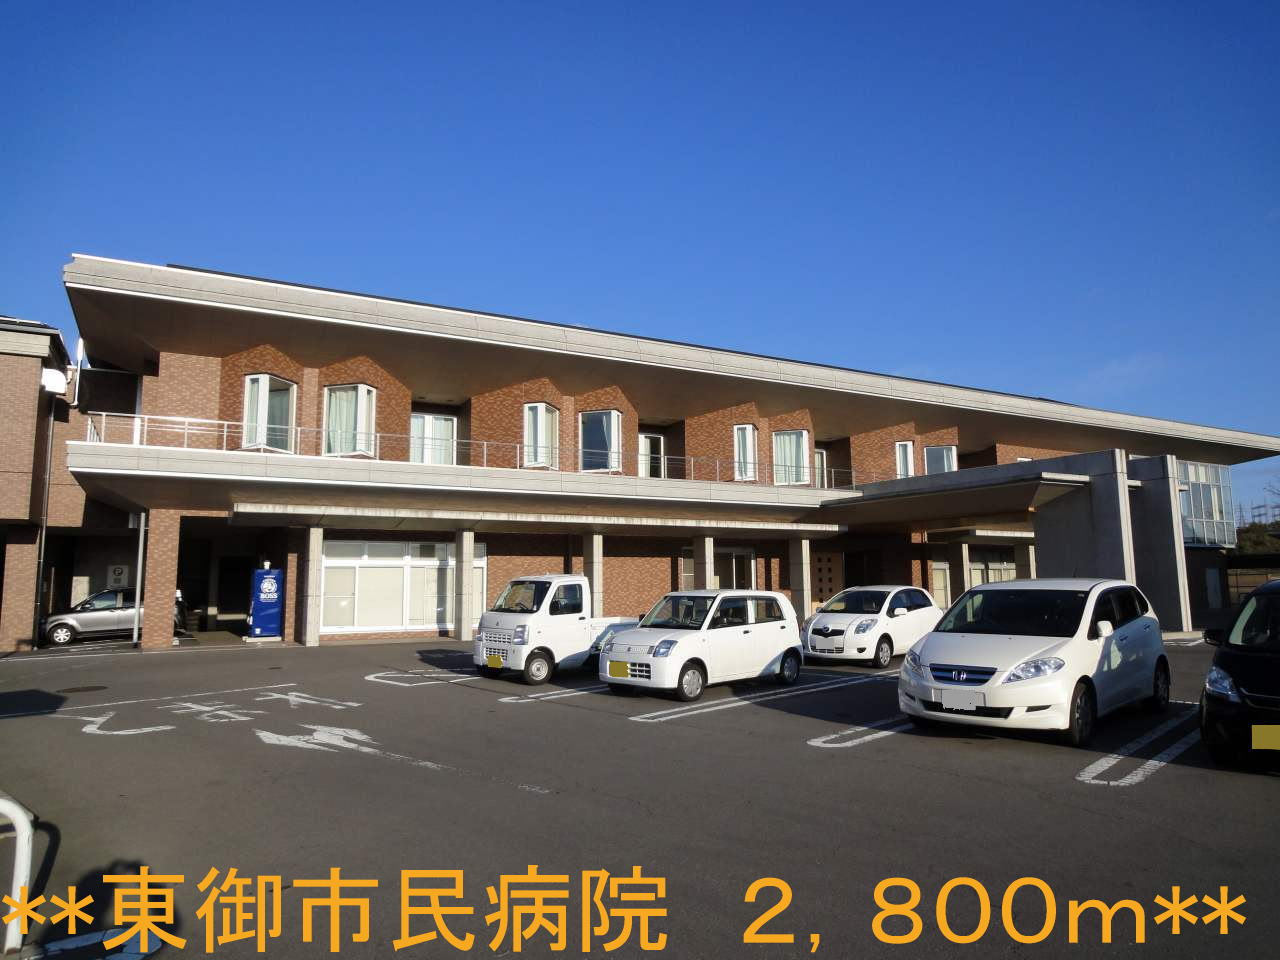 Hospital. Tomi City Hospital (hospital) to 2800m